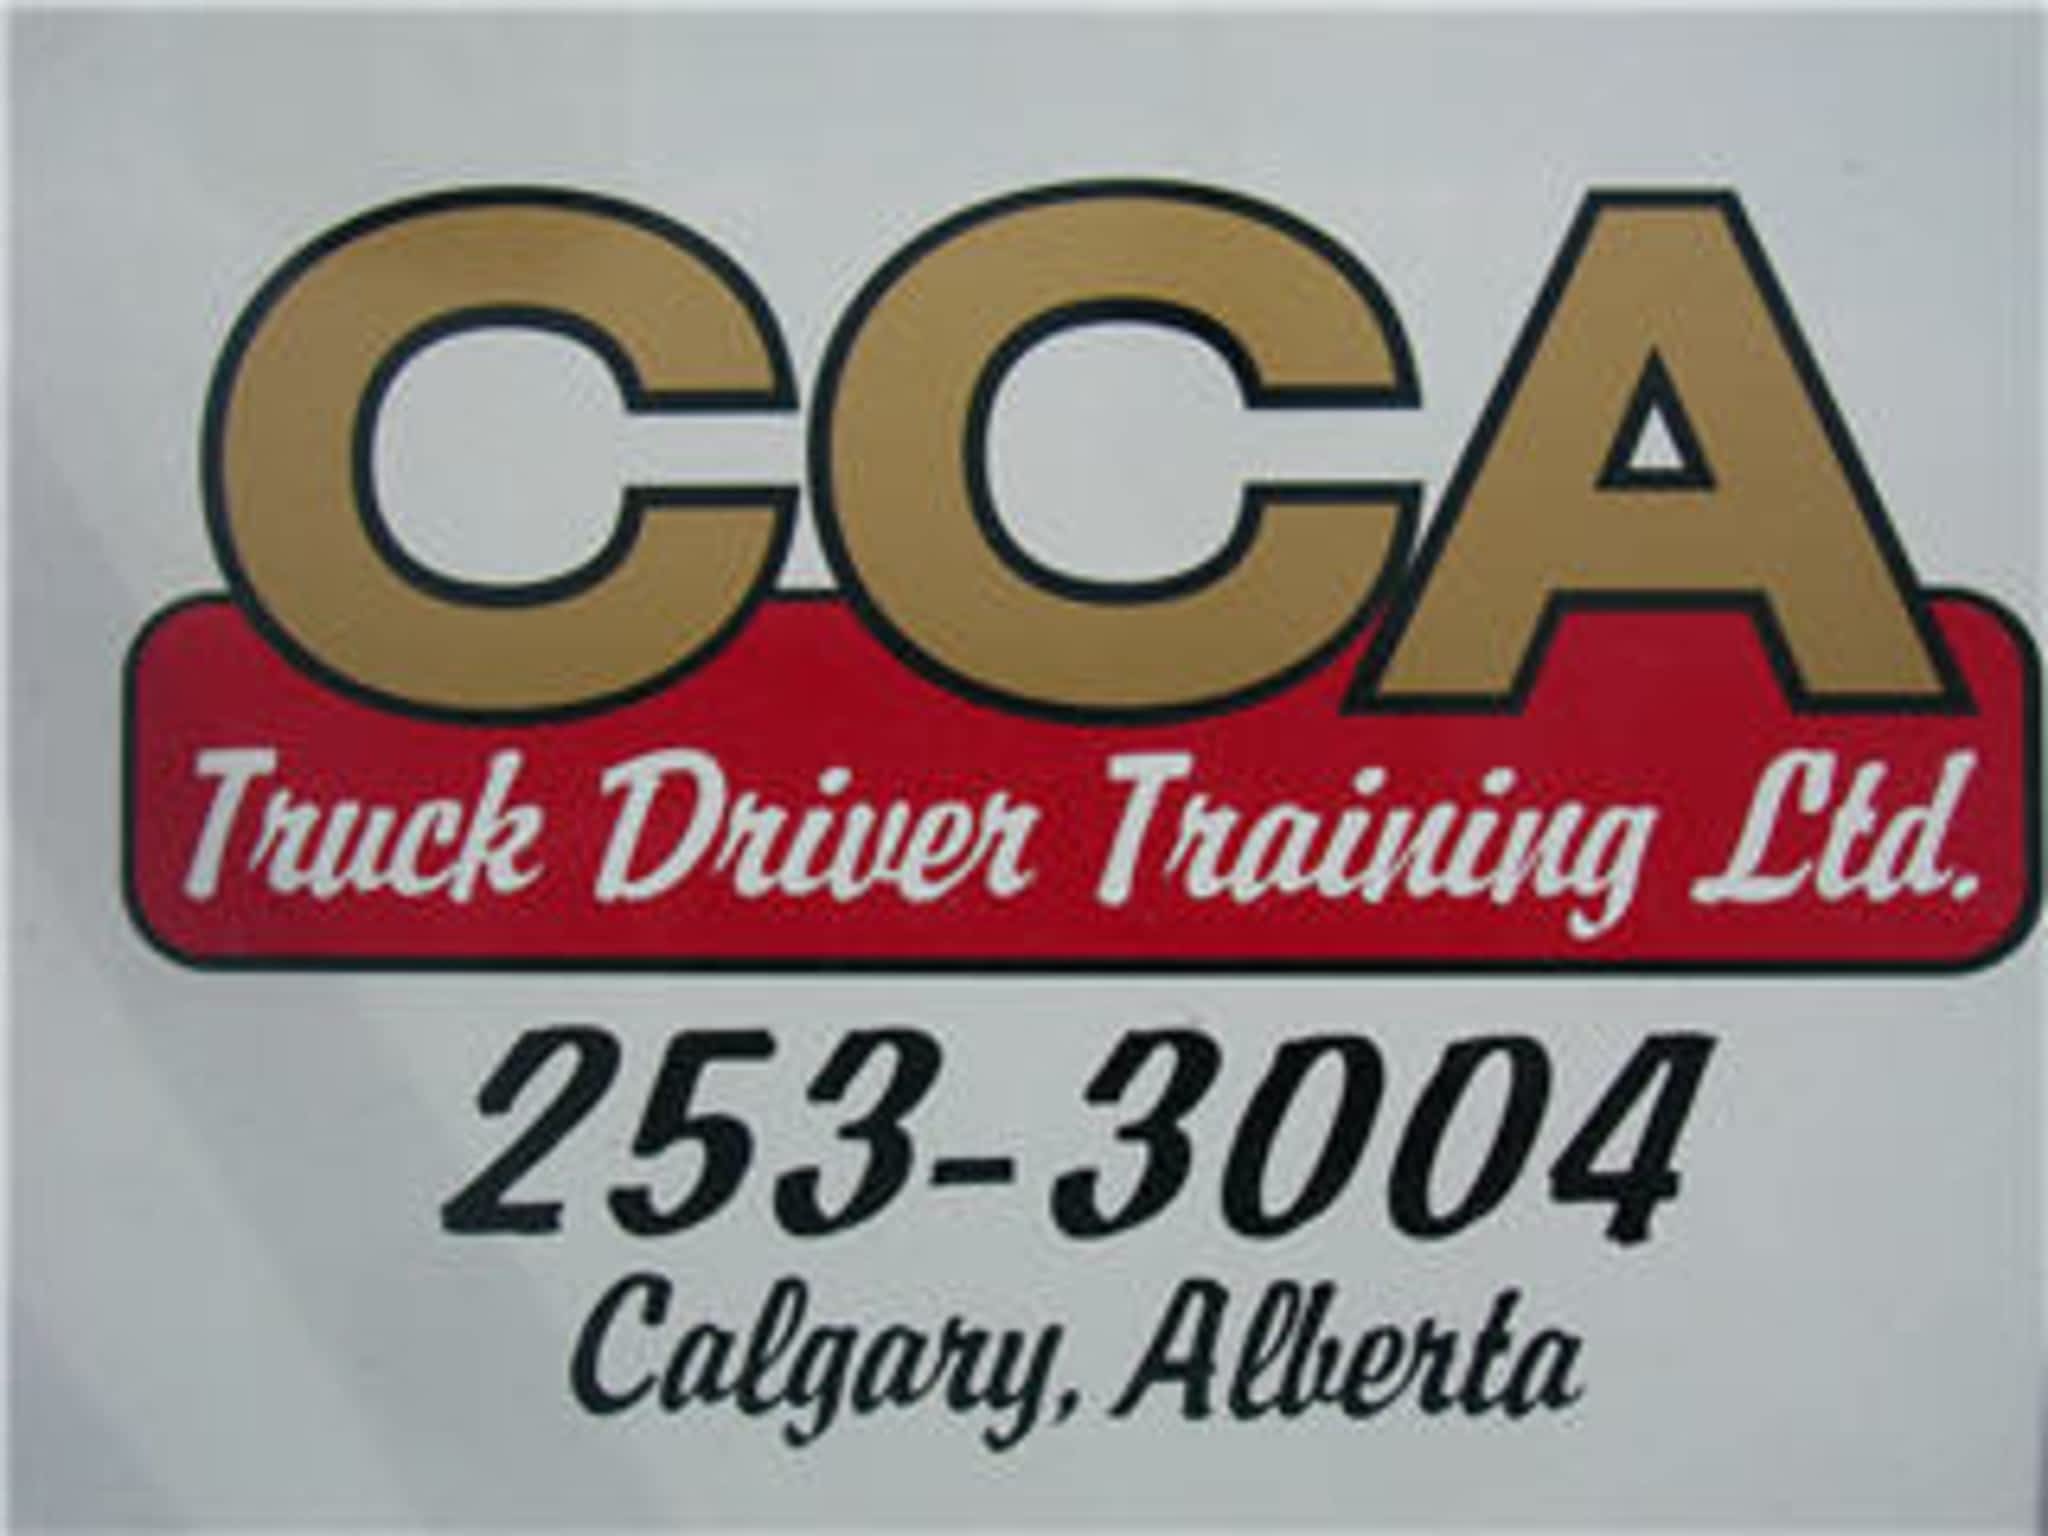 photo C C A Truck Driver Training Ltd